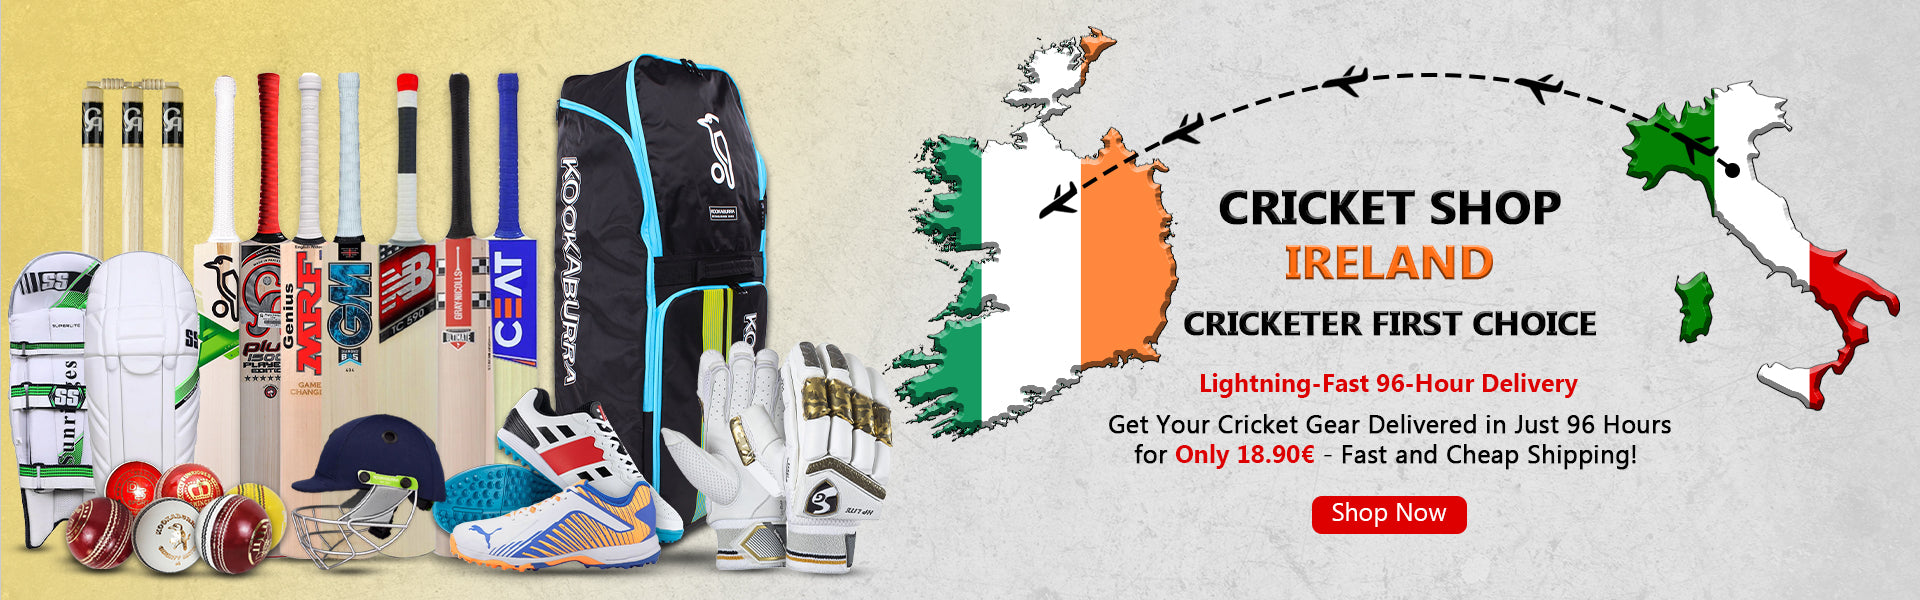 Cricket Shop Ireland | Cricketer first Choice